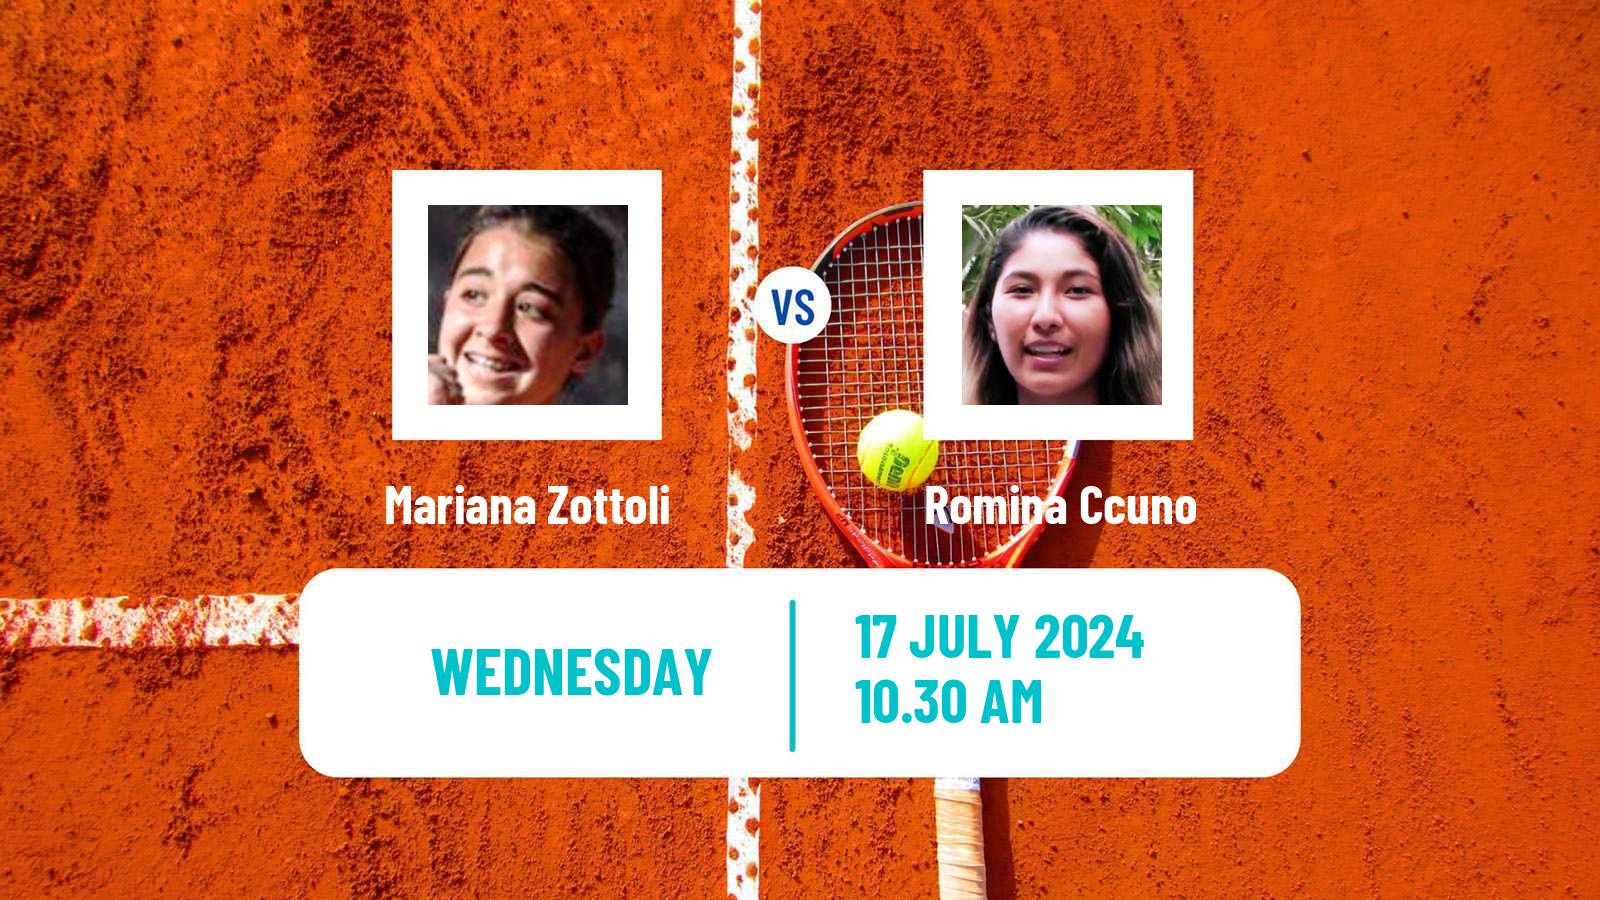 Tennis ITF W15 Lujan 2 Women Mariana Zottoli - Romina Ccuno